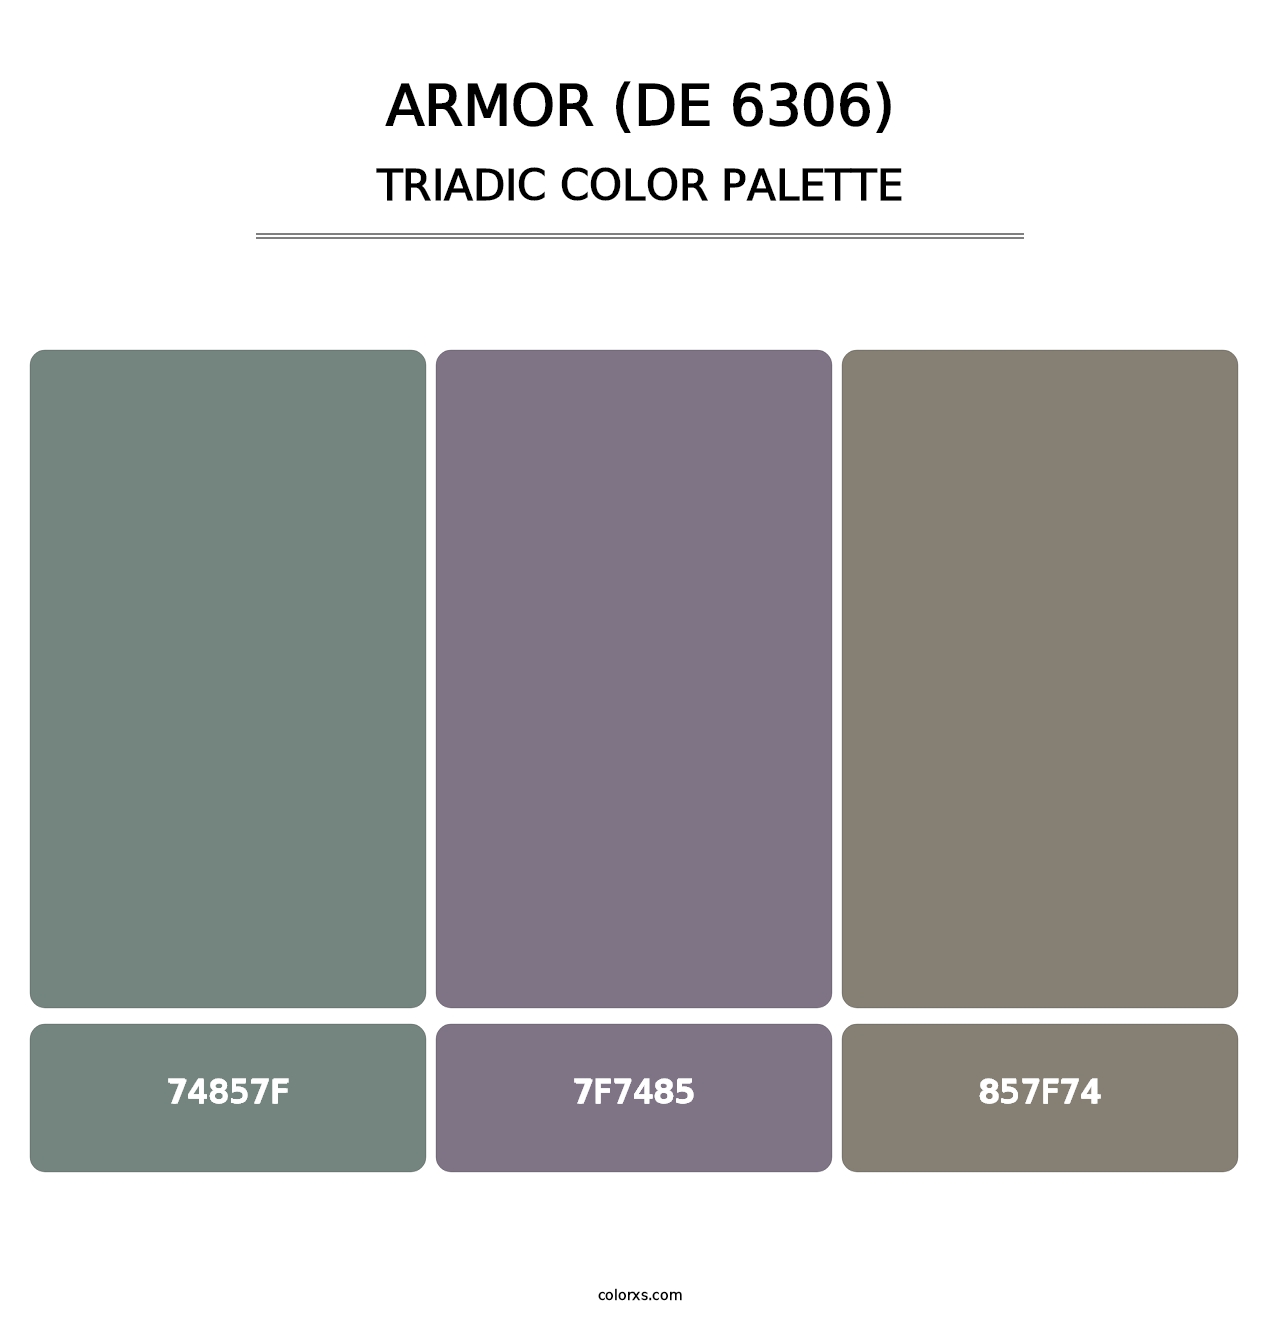 Armor (DE 6306) - Triadic Color Palette